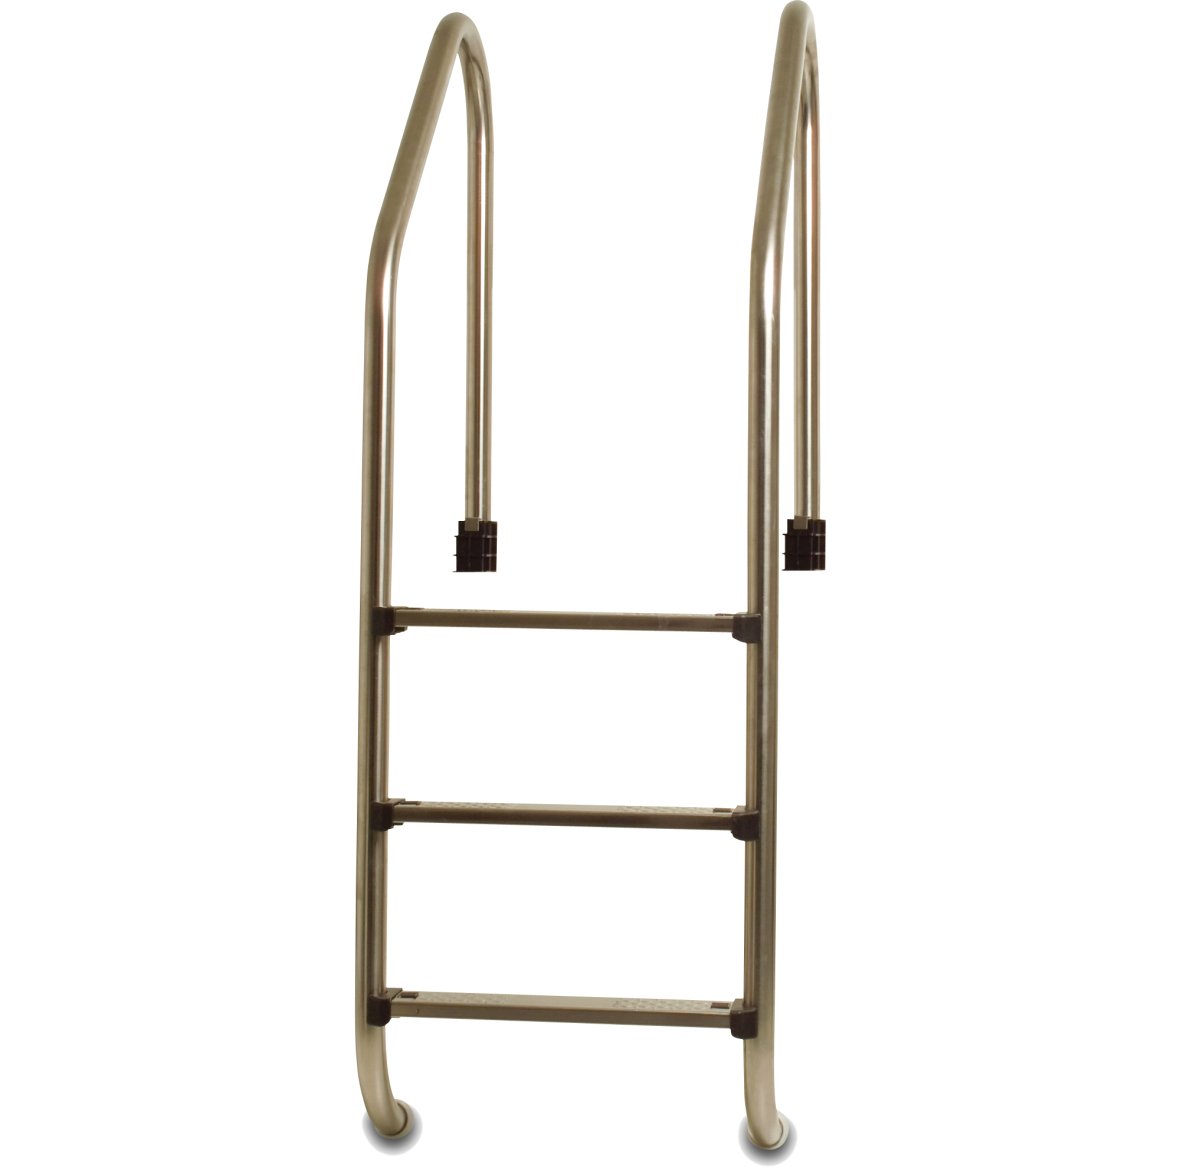 Swimming pool ladder – Wide model 3 steps